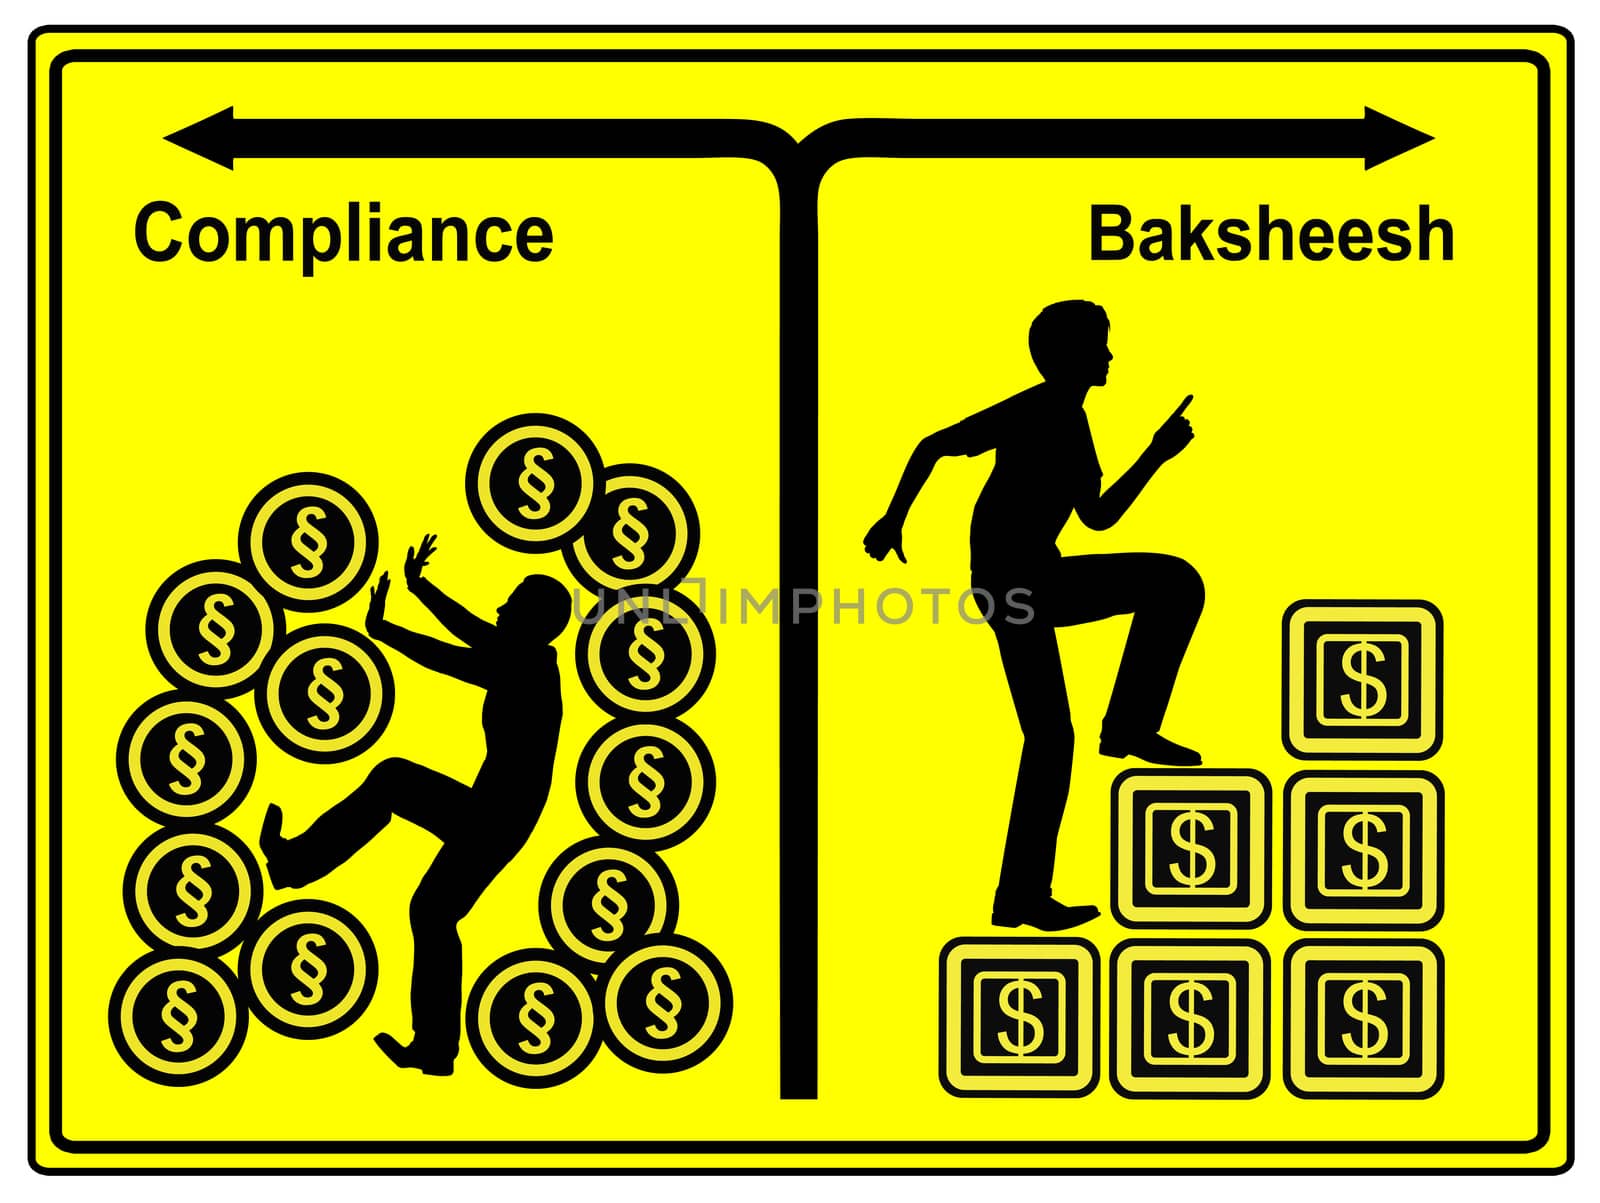 Compliance or Baksheesh by Bambara